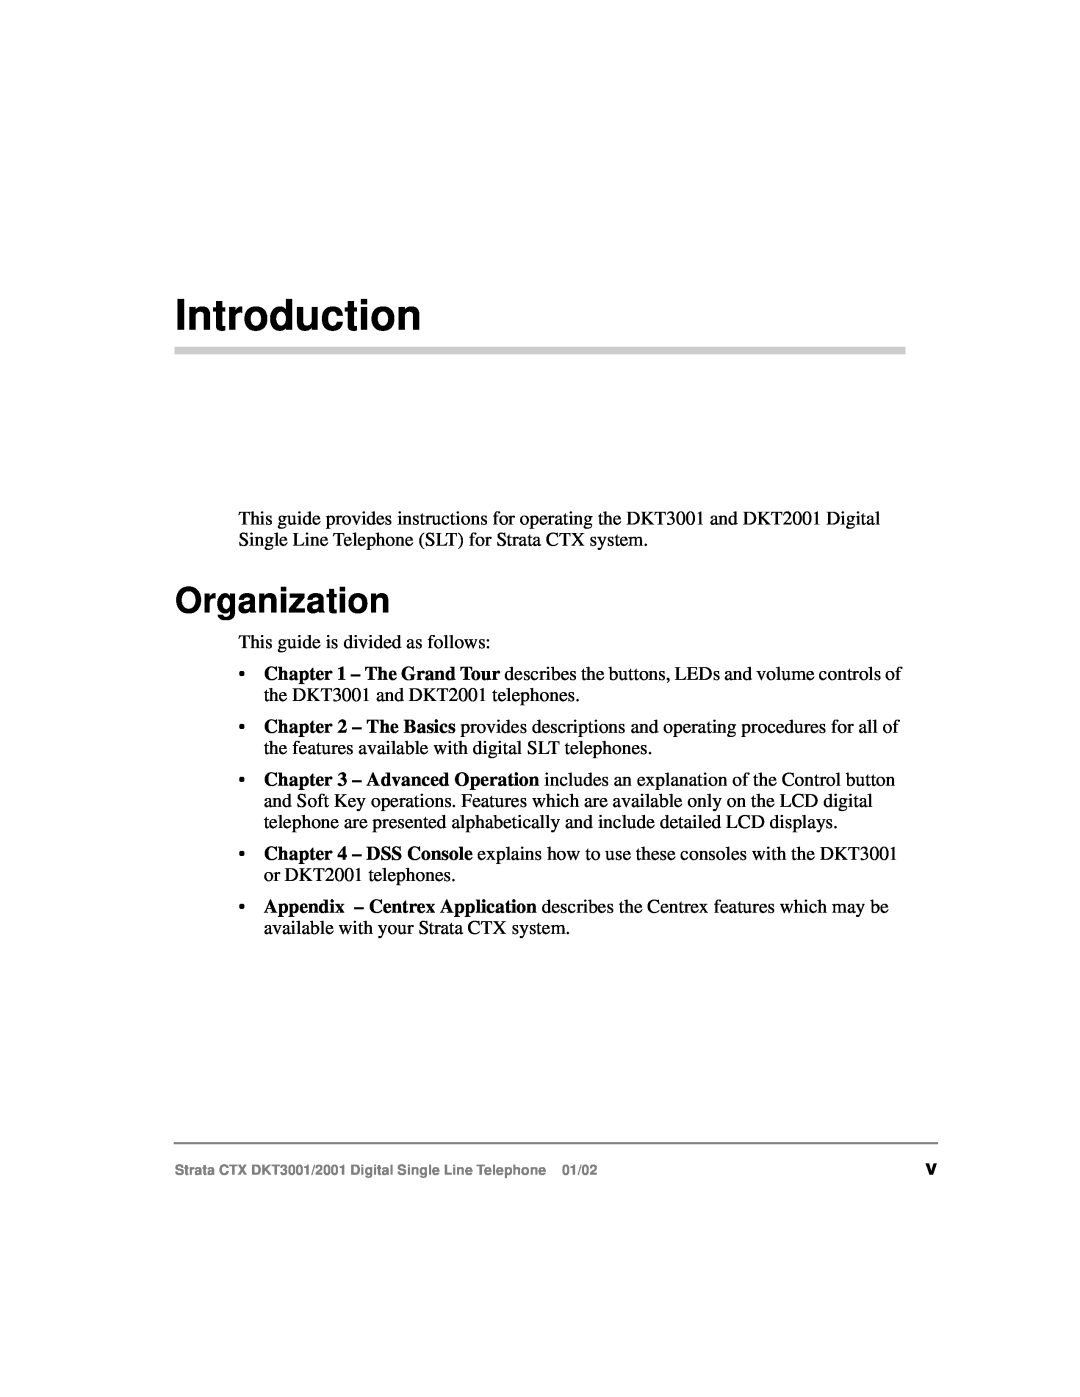 Toshiba 2001, DXT3001 manual Introduction, Organization 